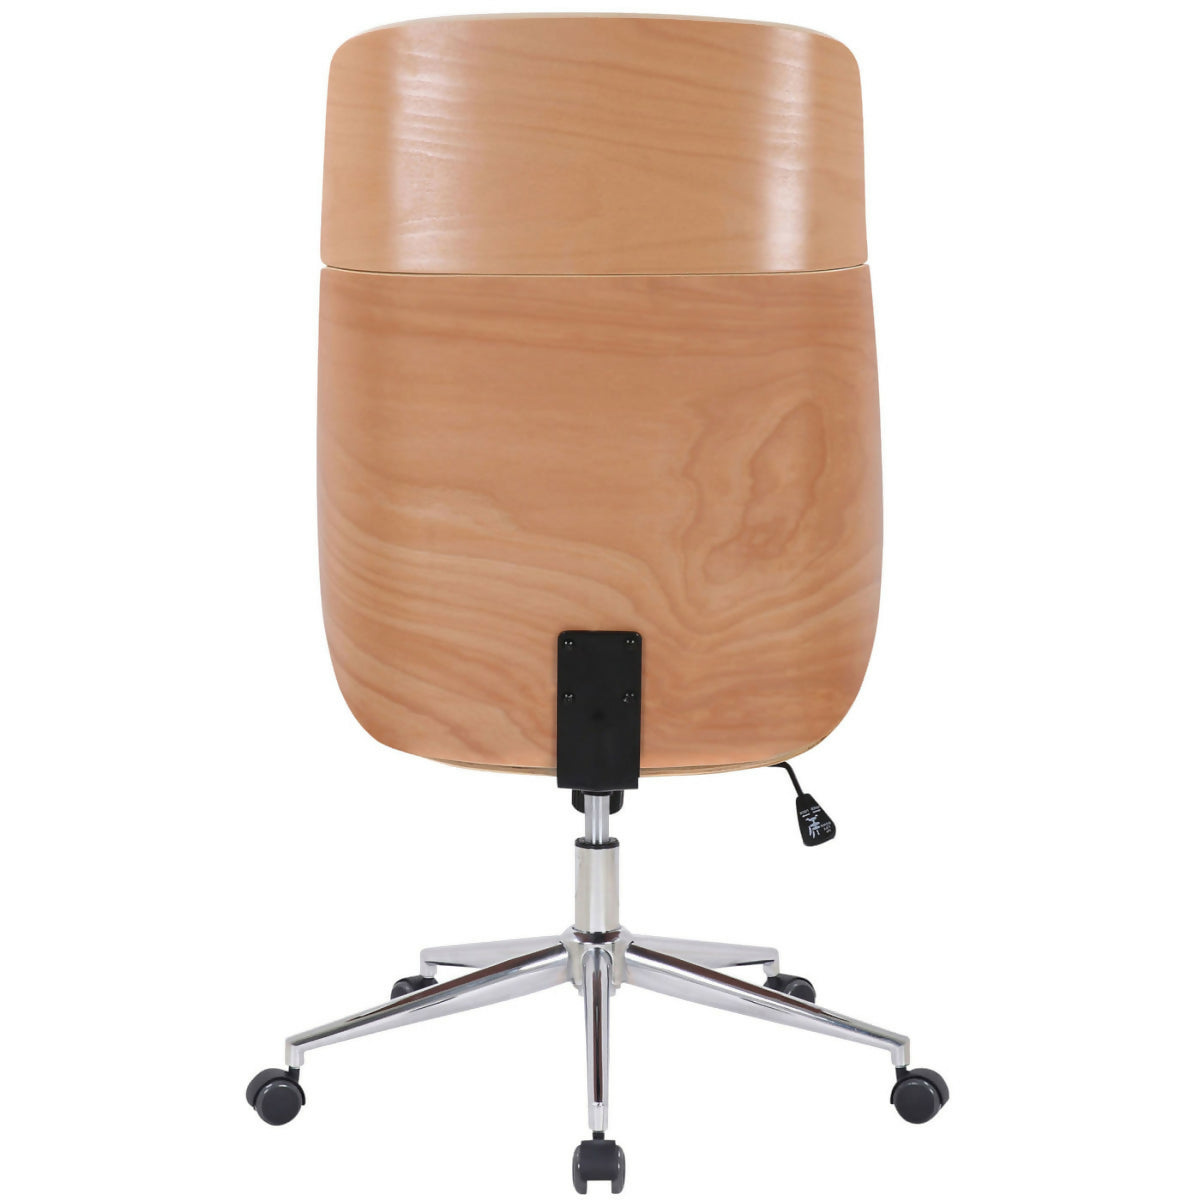 Varel office armchair - Natural wood - brown